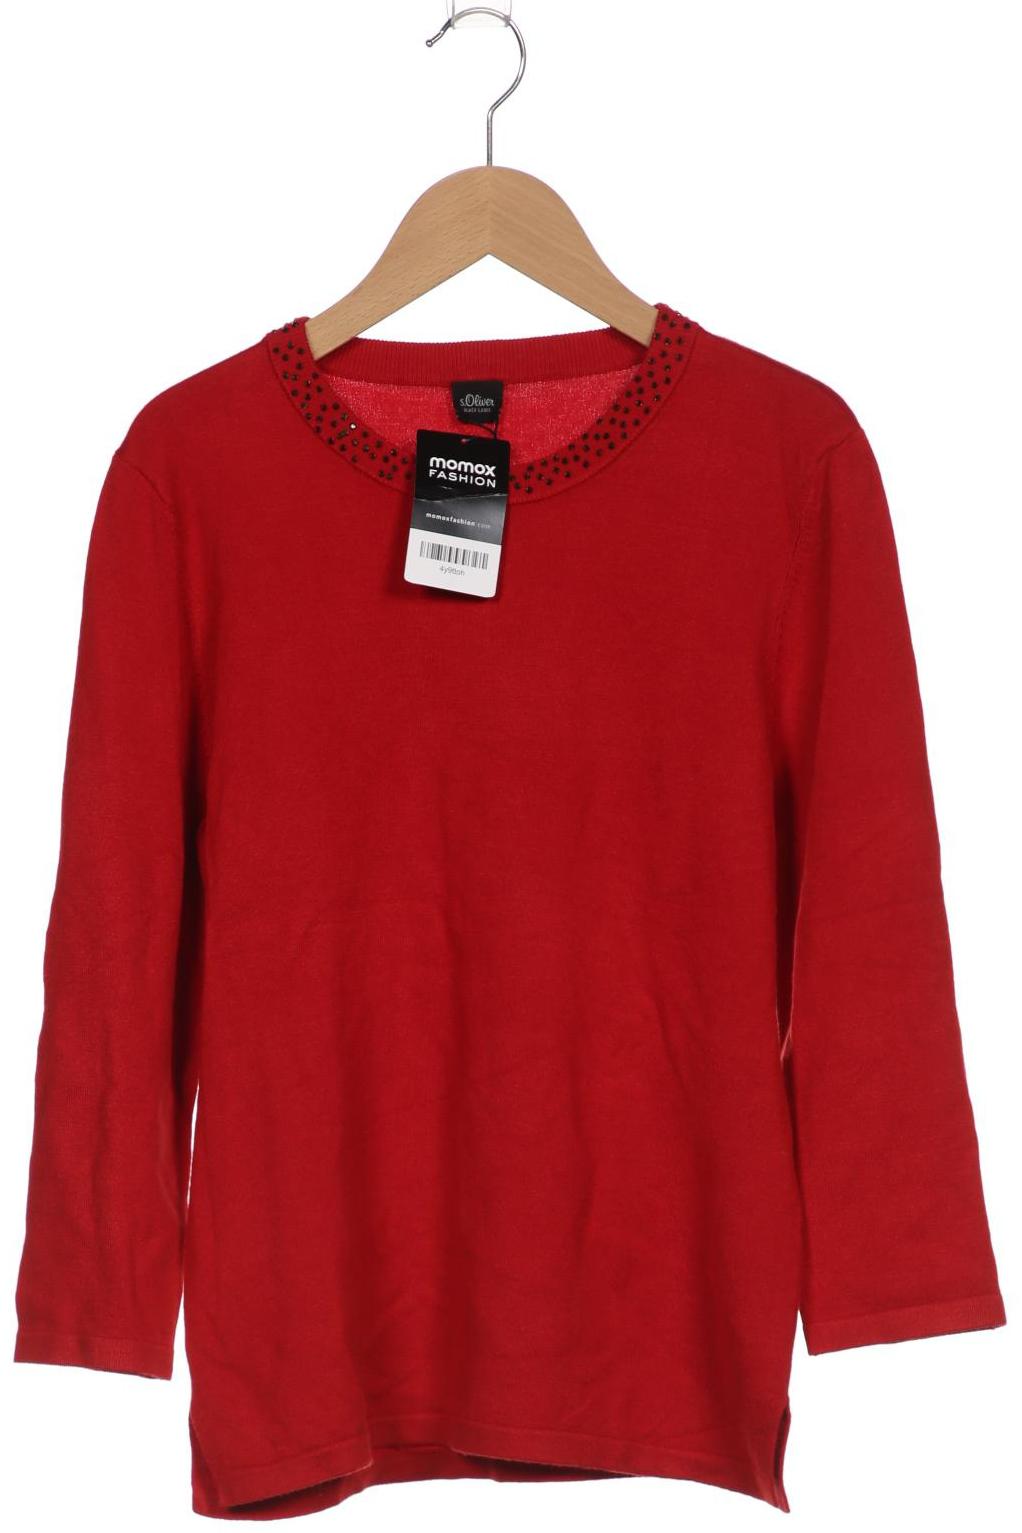 s.Oliver Selection Damen Pullover, rot von s.Oliver Selection